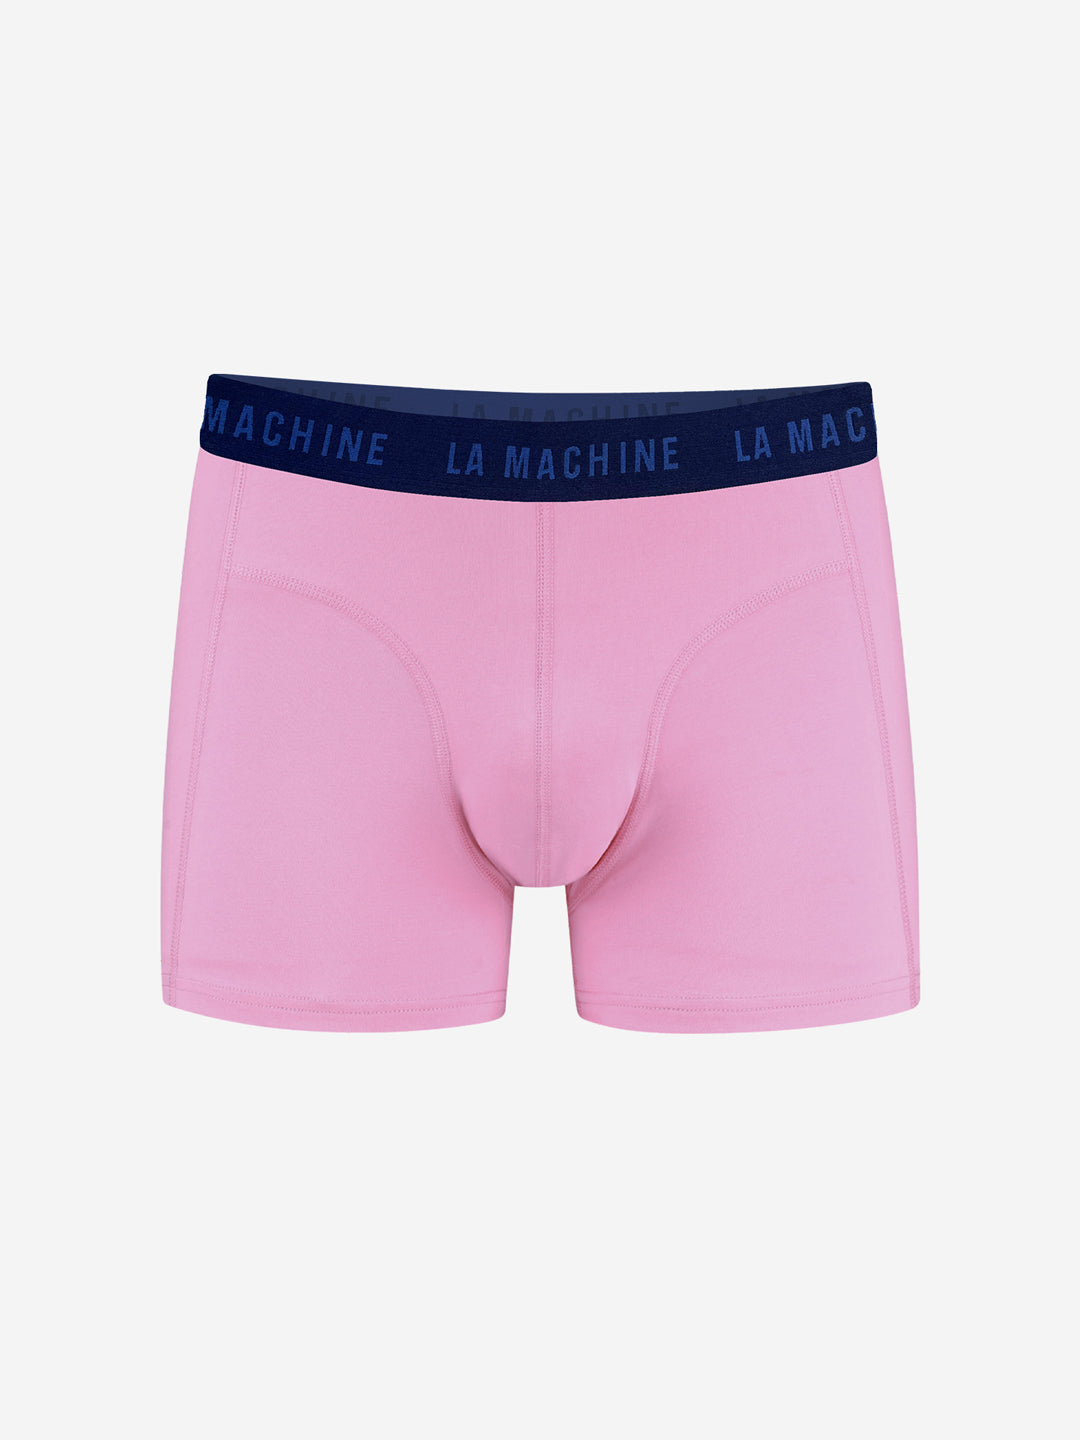 La Machine - Boxershorts - Giro Pink